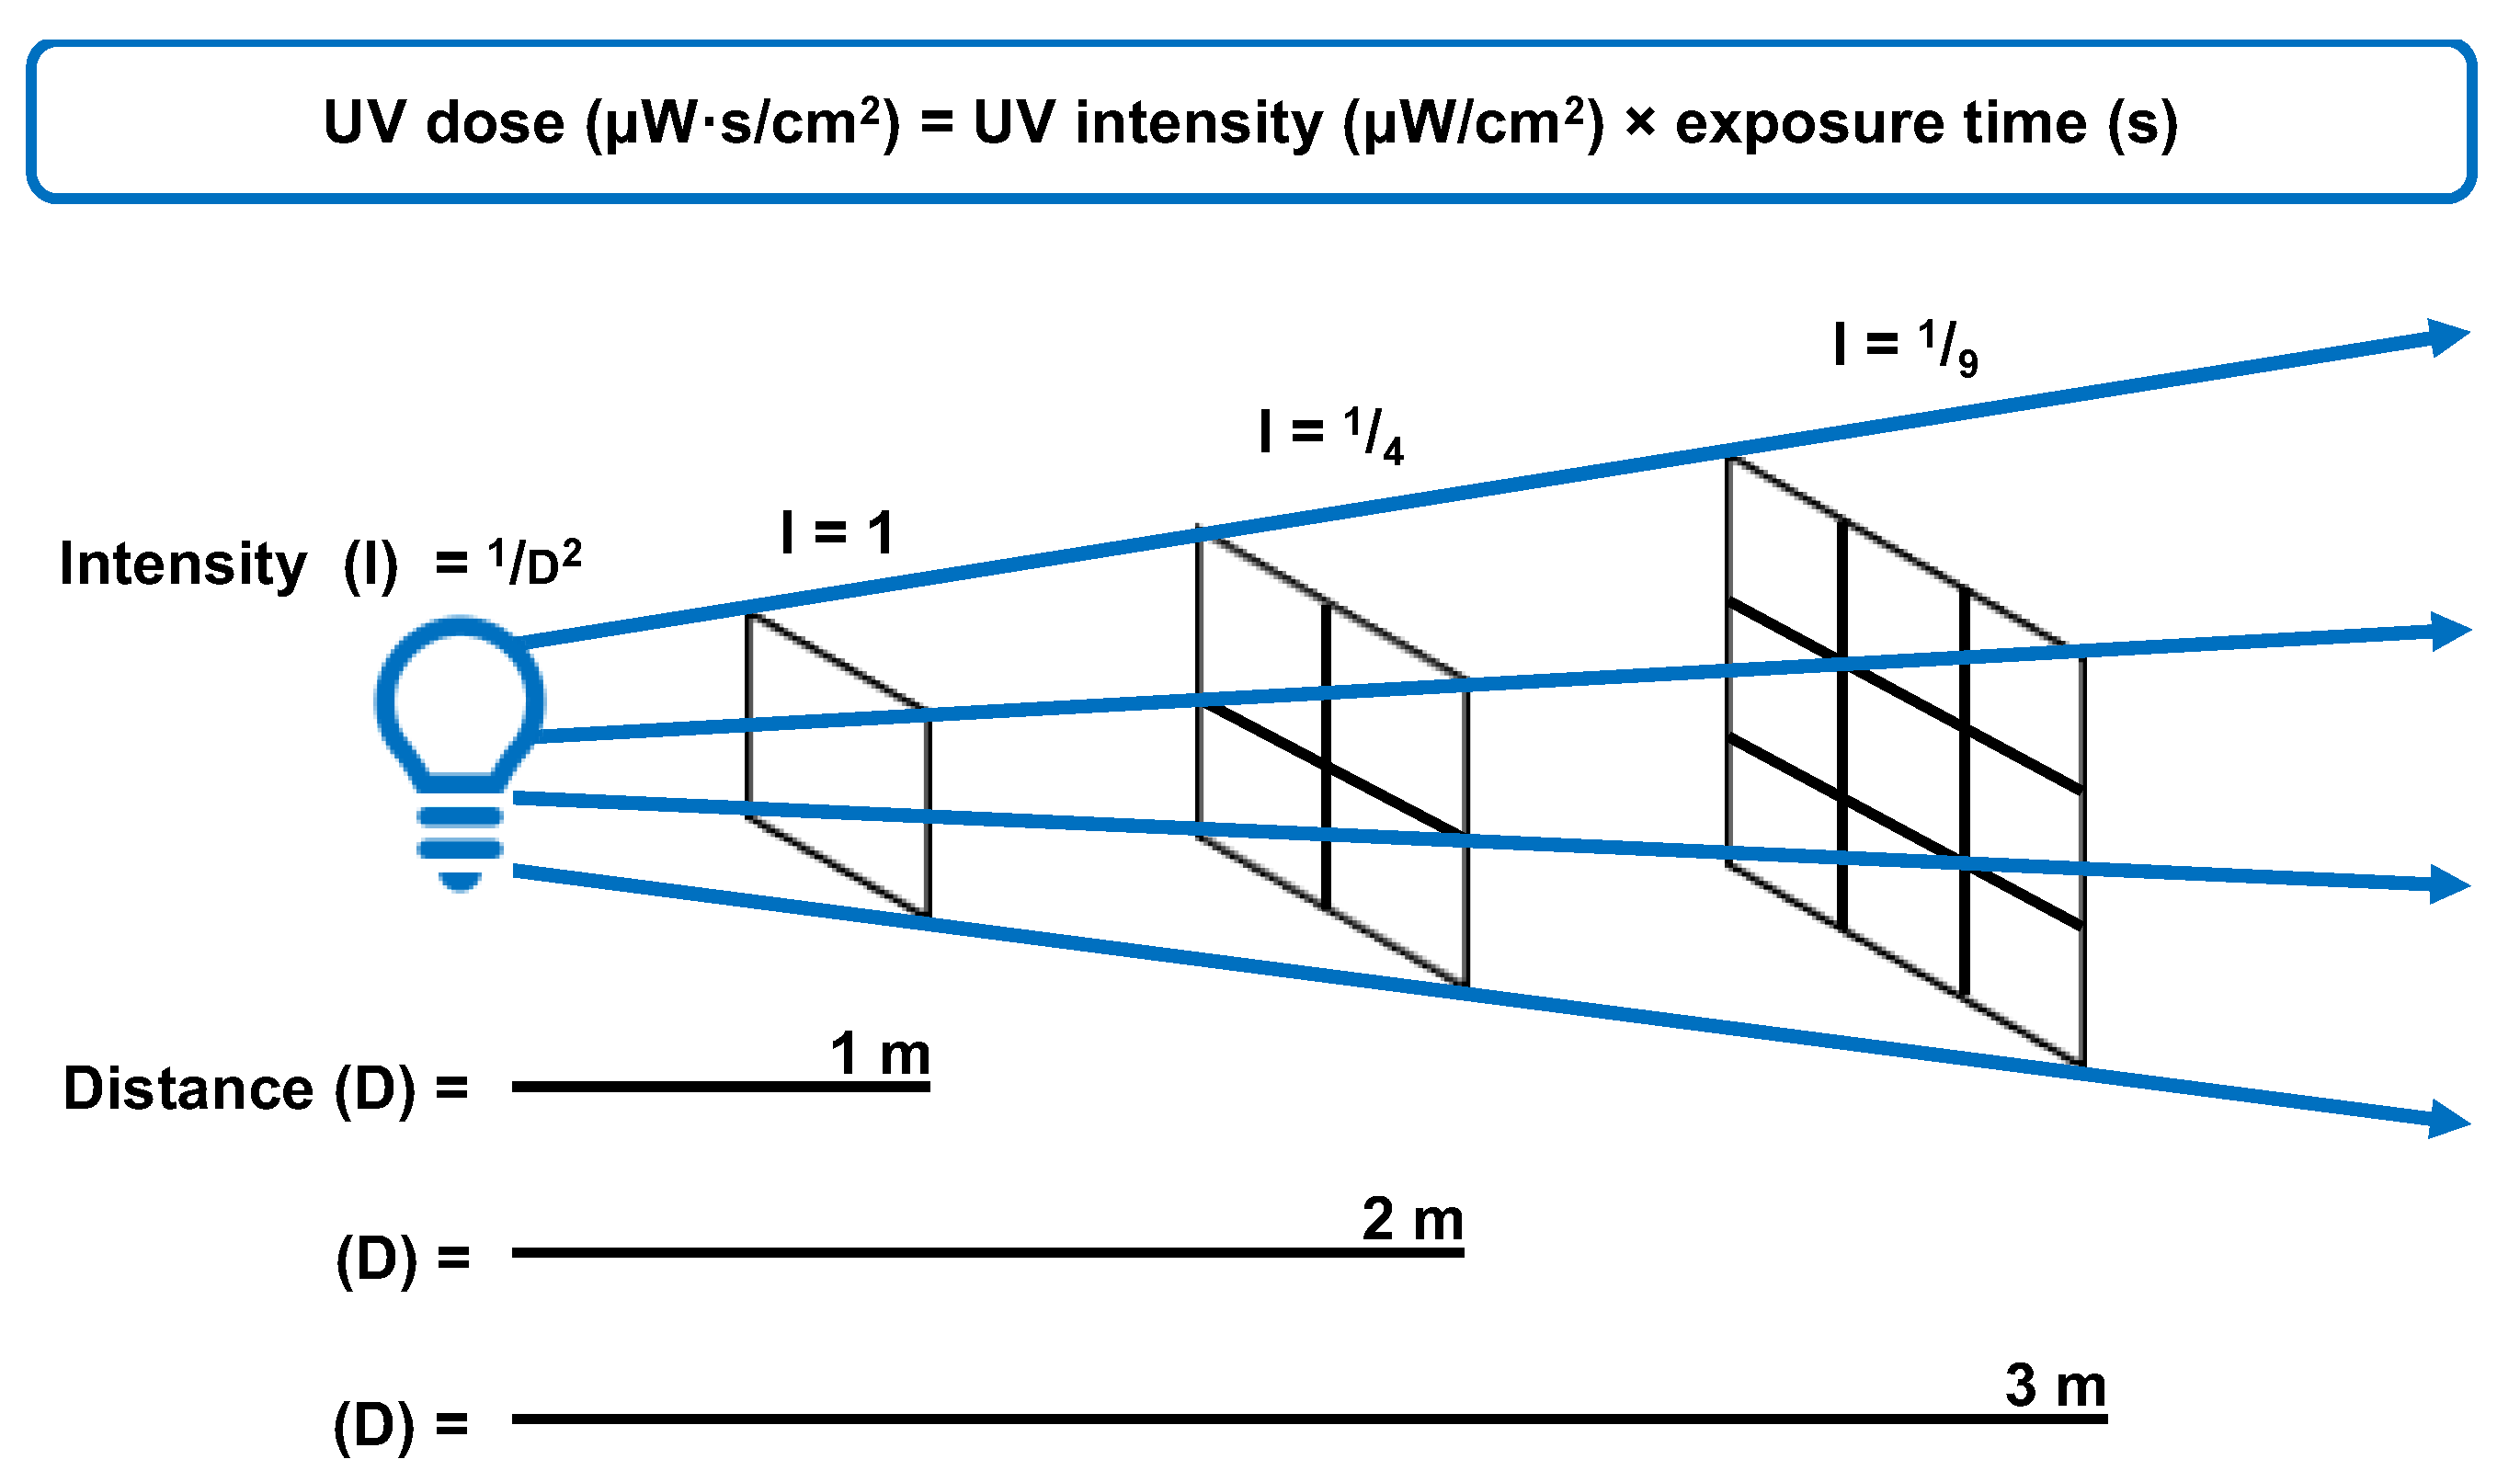 UV light: Corona care: UV LEDs can disinfect surfaces, reduce transmission  - The Economic Times